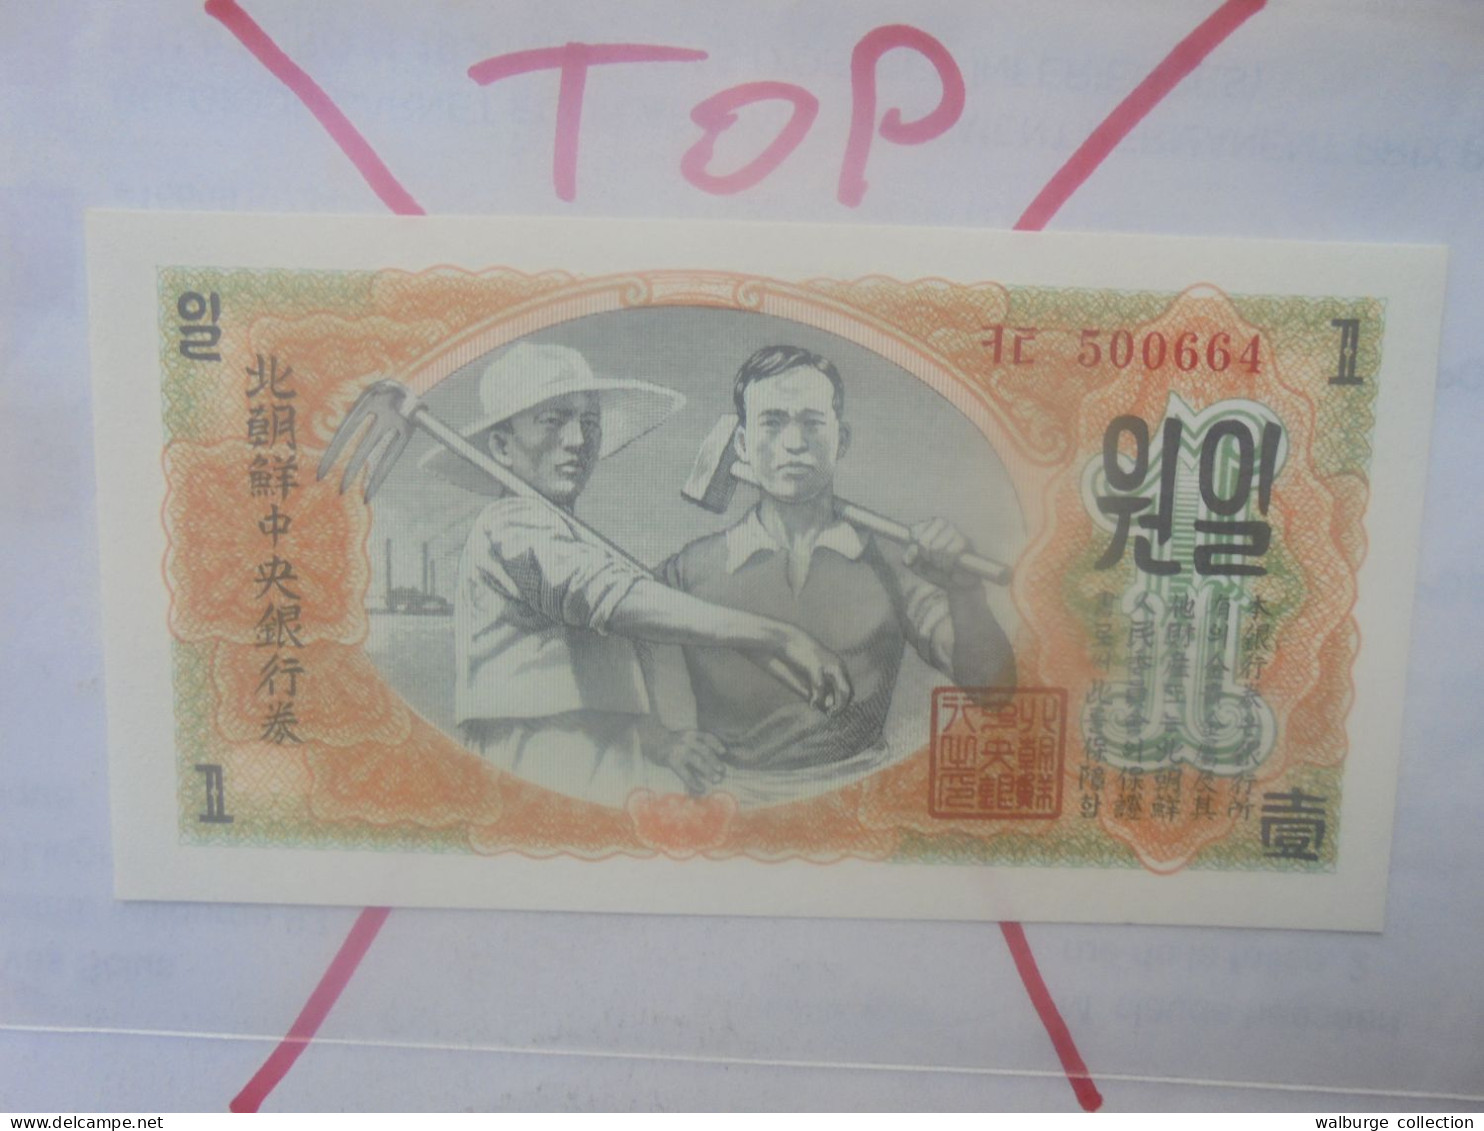 COREE (NORD) 1 WON 1947 Neuf (B.33) - Corea Del Nord